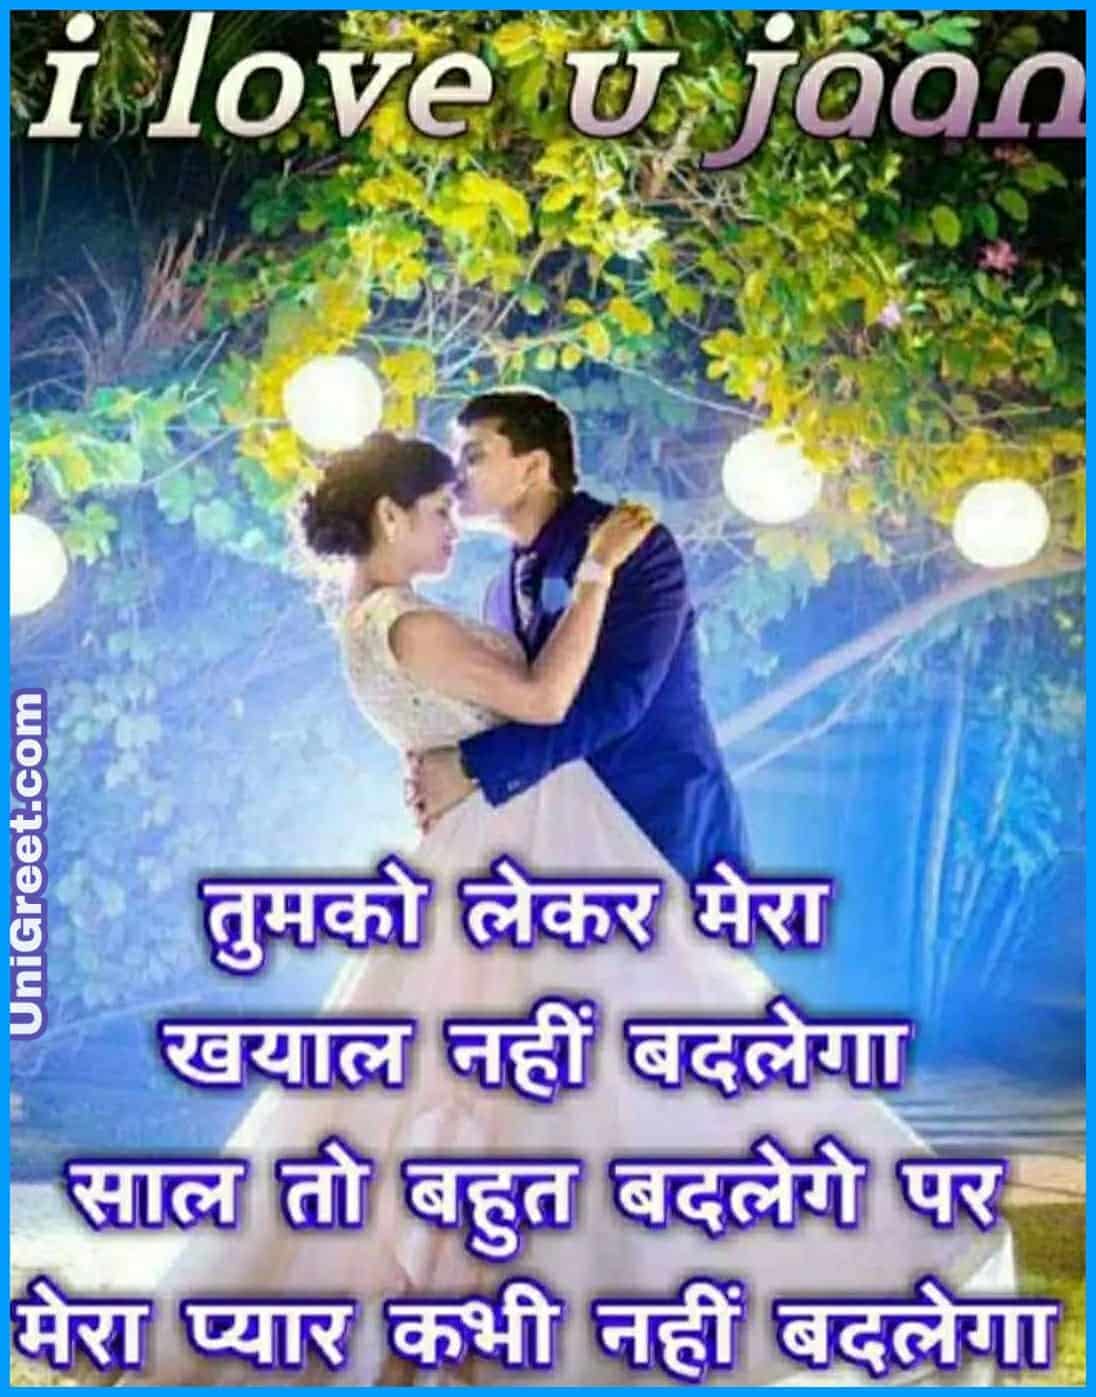 Cute Love Shayari Whatsapp Dp Cute Love Sms Cute Relationship Shayari In Hindi Best 